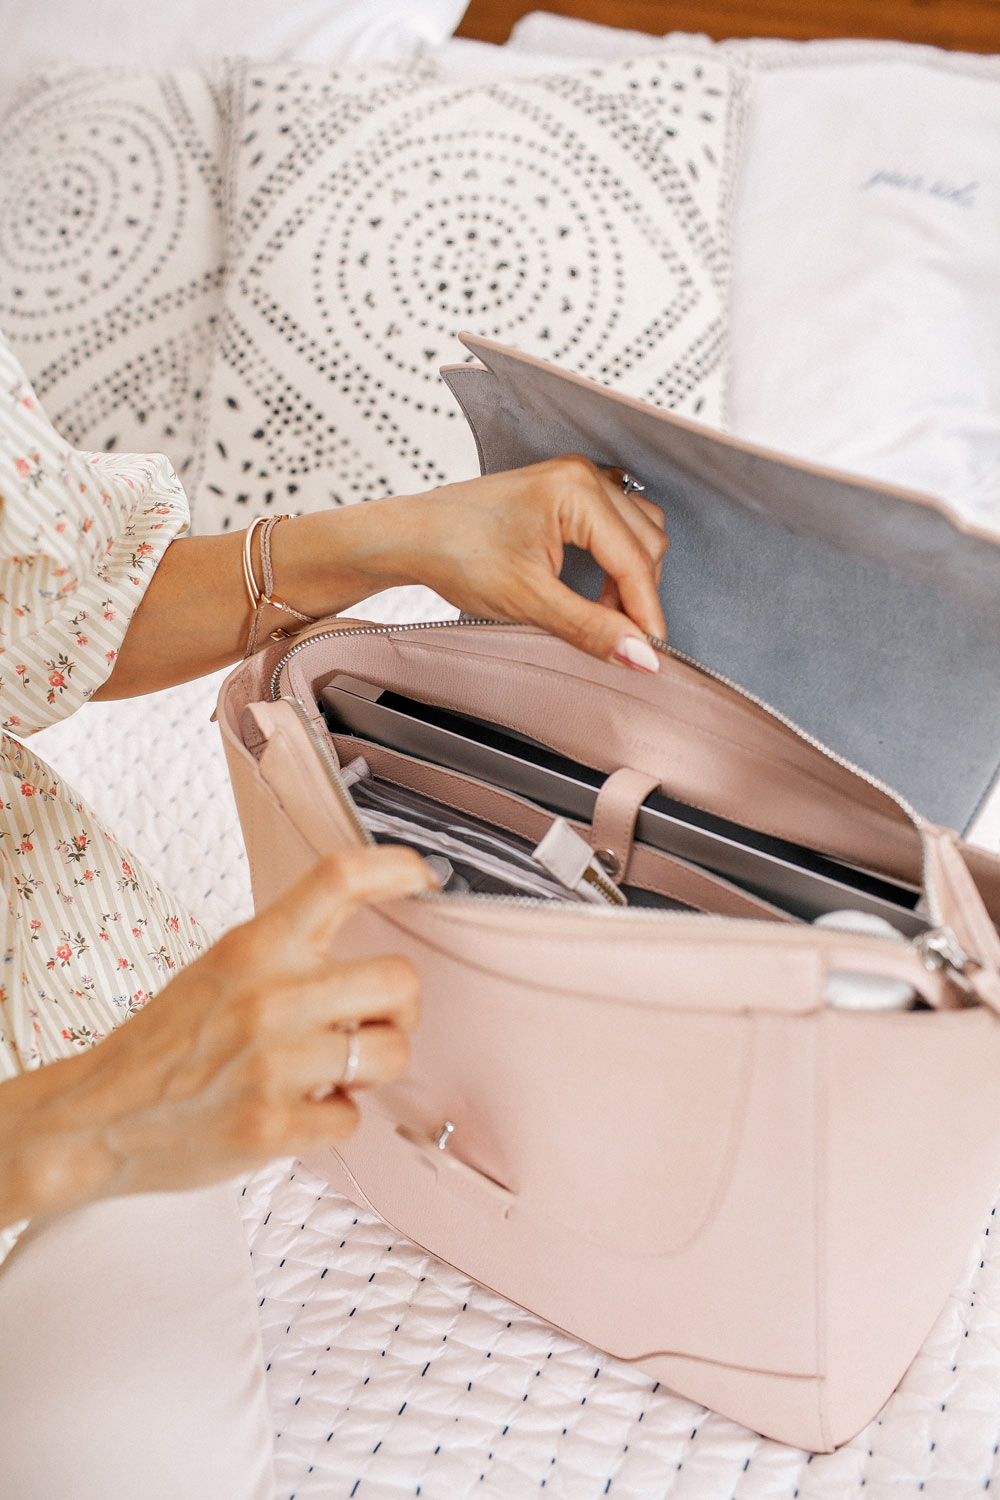 Senreve Maestra Bag Review - Elle Blogs